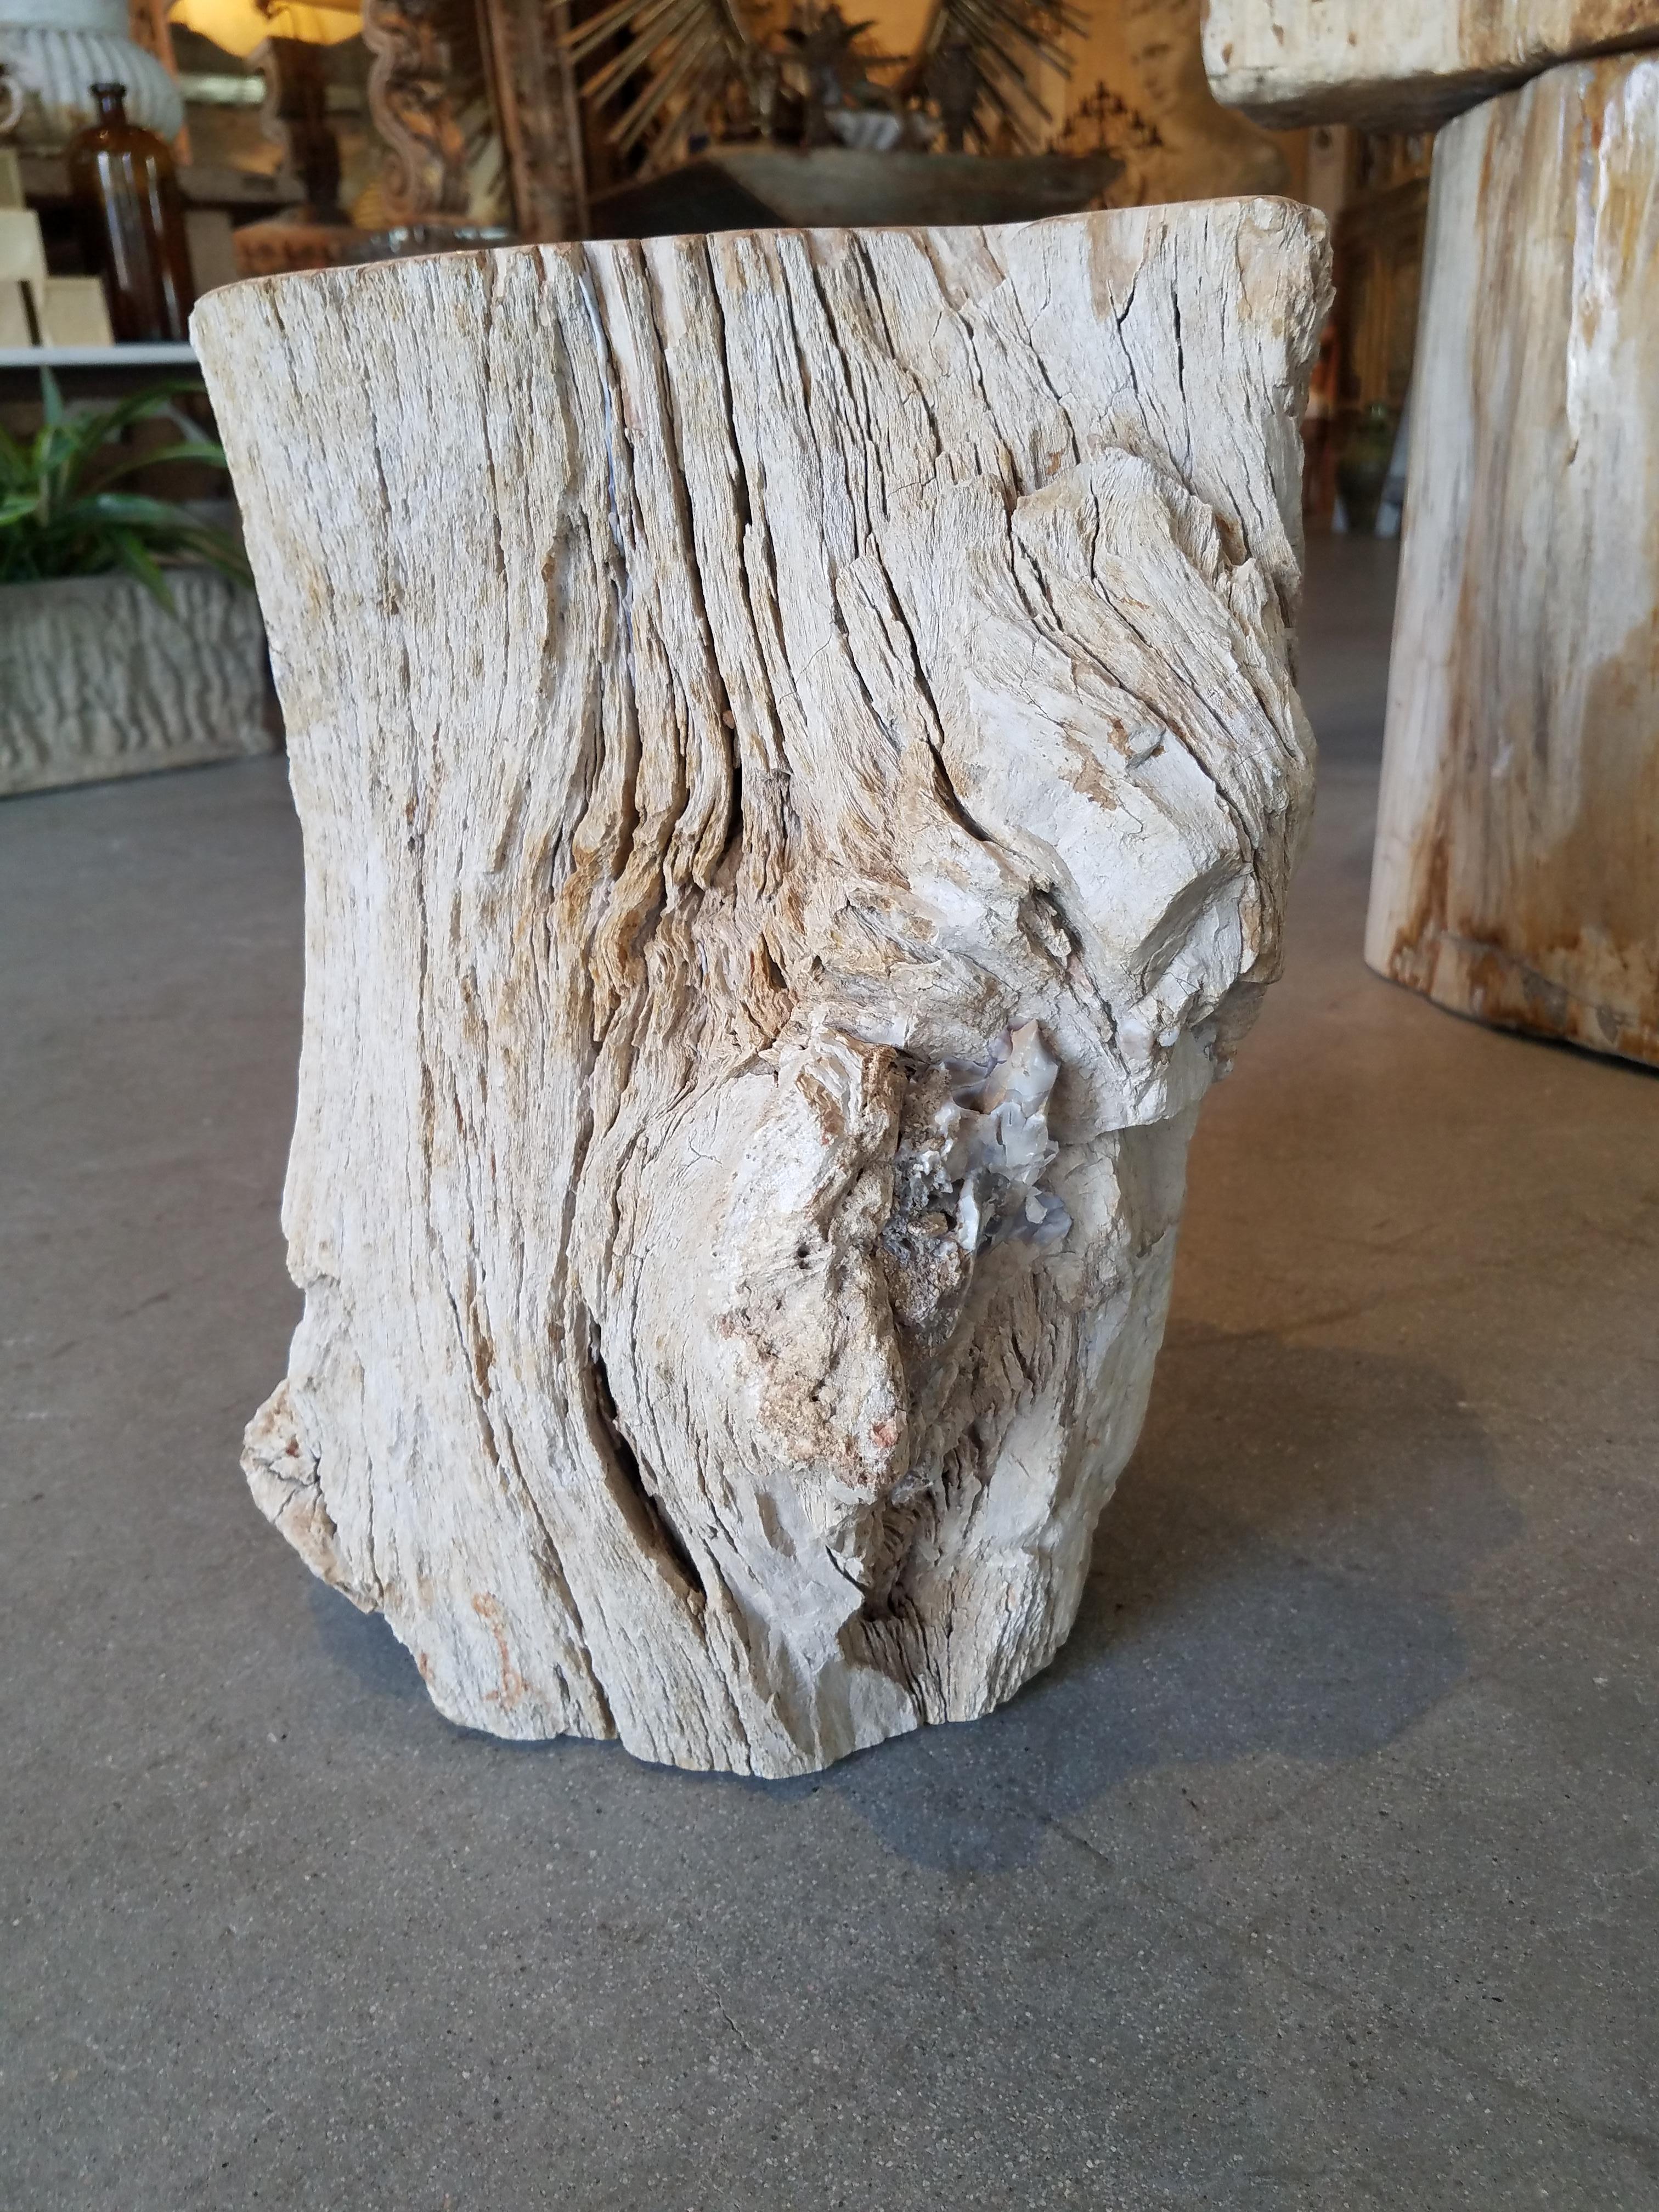 crystalized wood